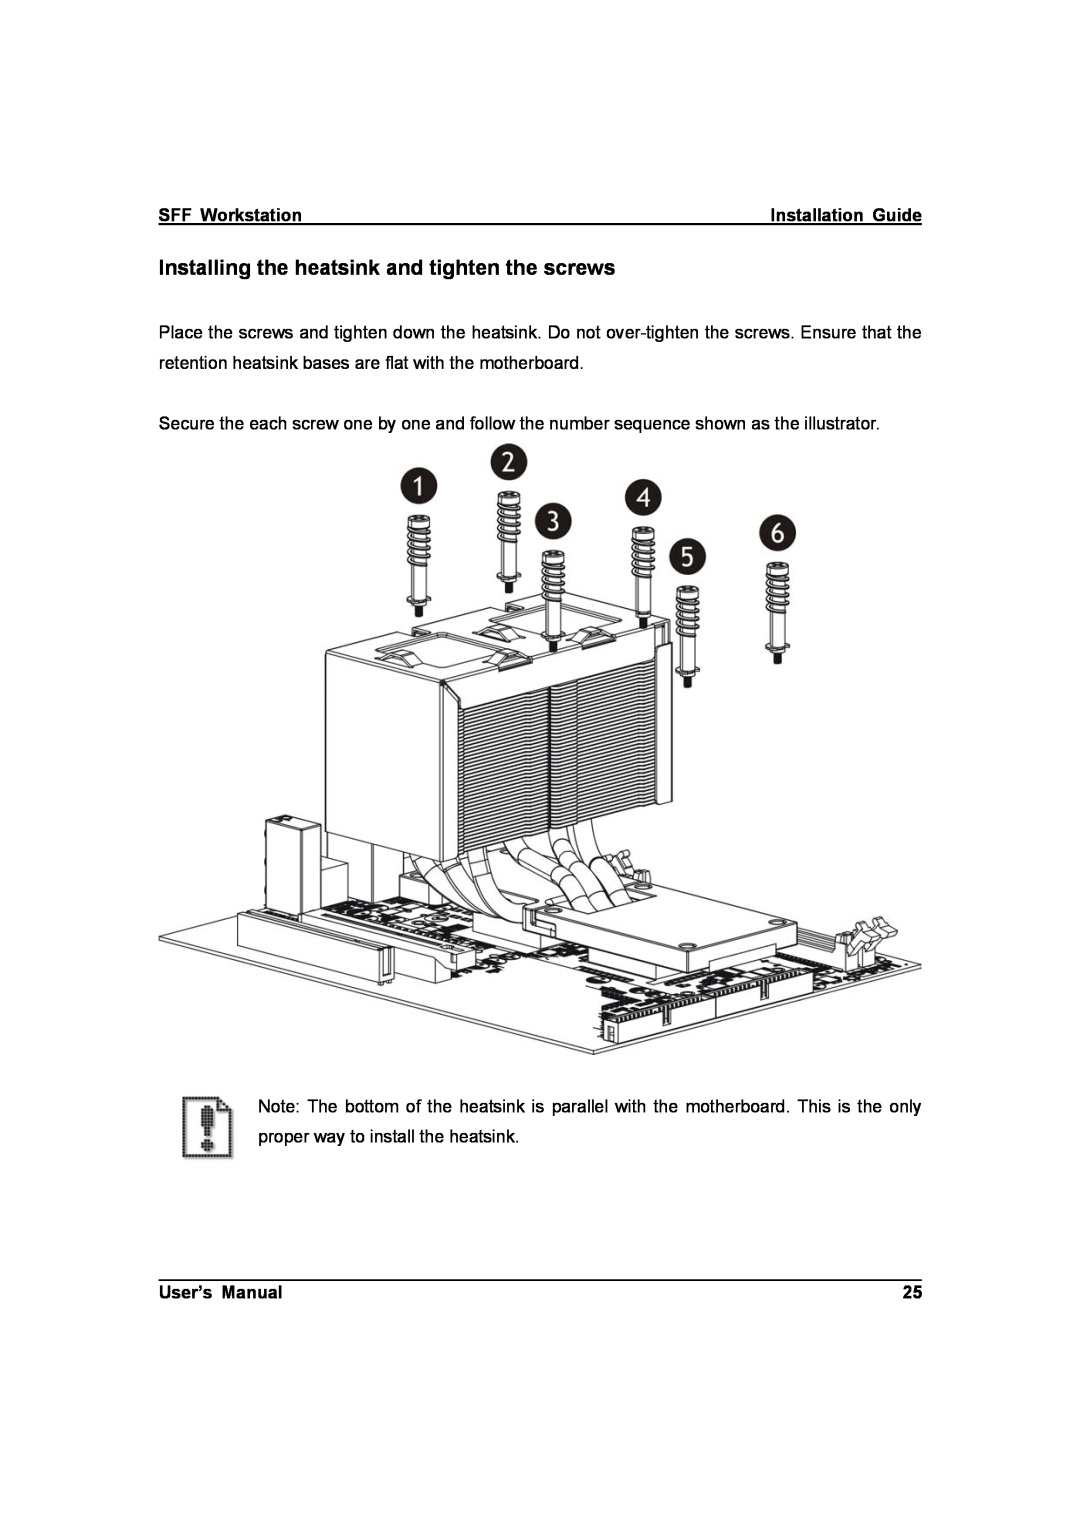 IBM ZMAXdp user manual Installing the heatsink and tighten the screws, SFF Workstation, User’s Manual 